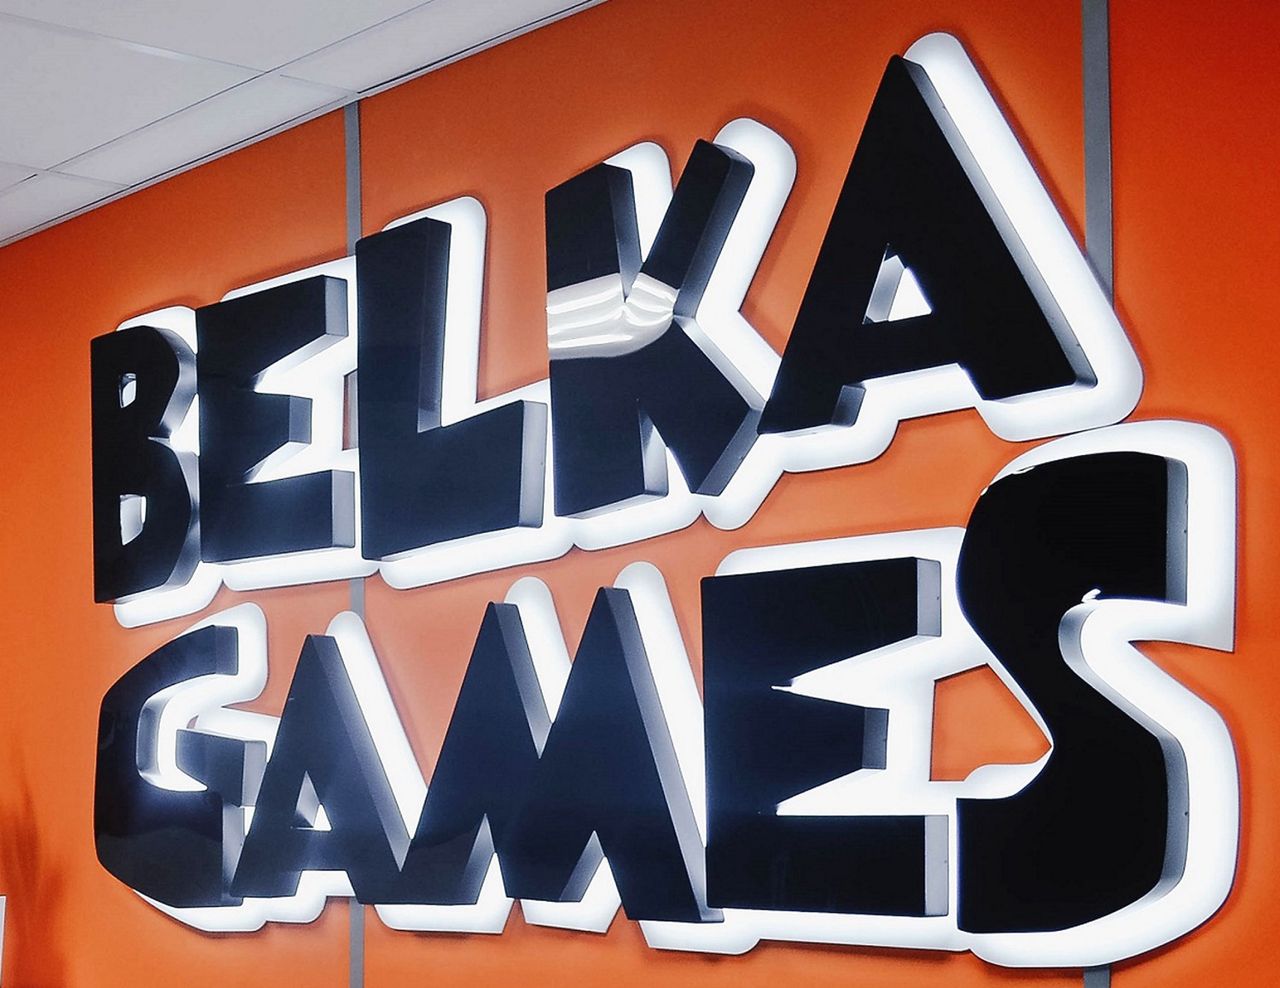 Belka Games